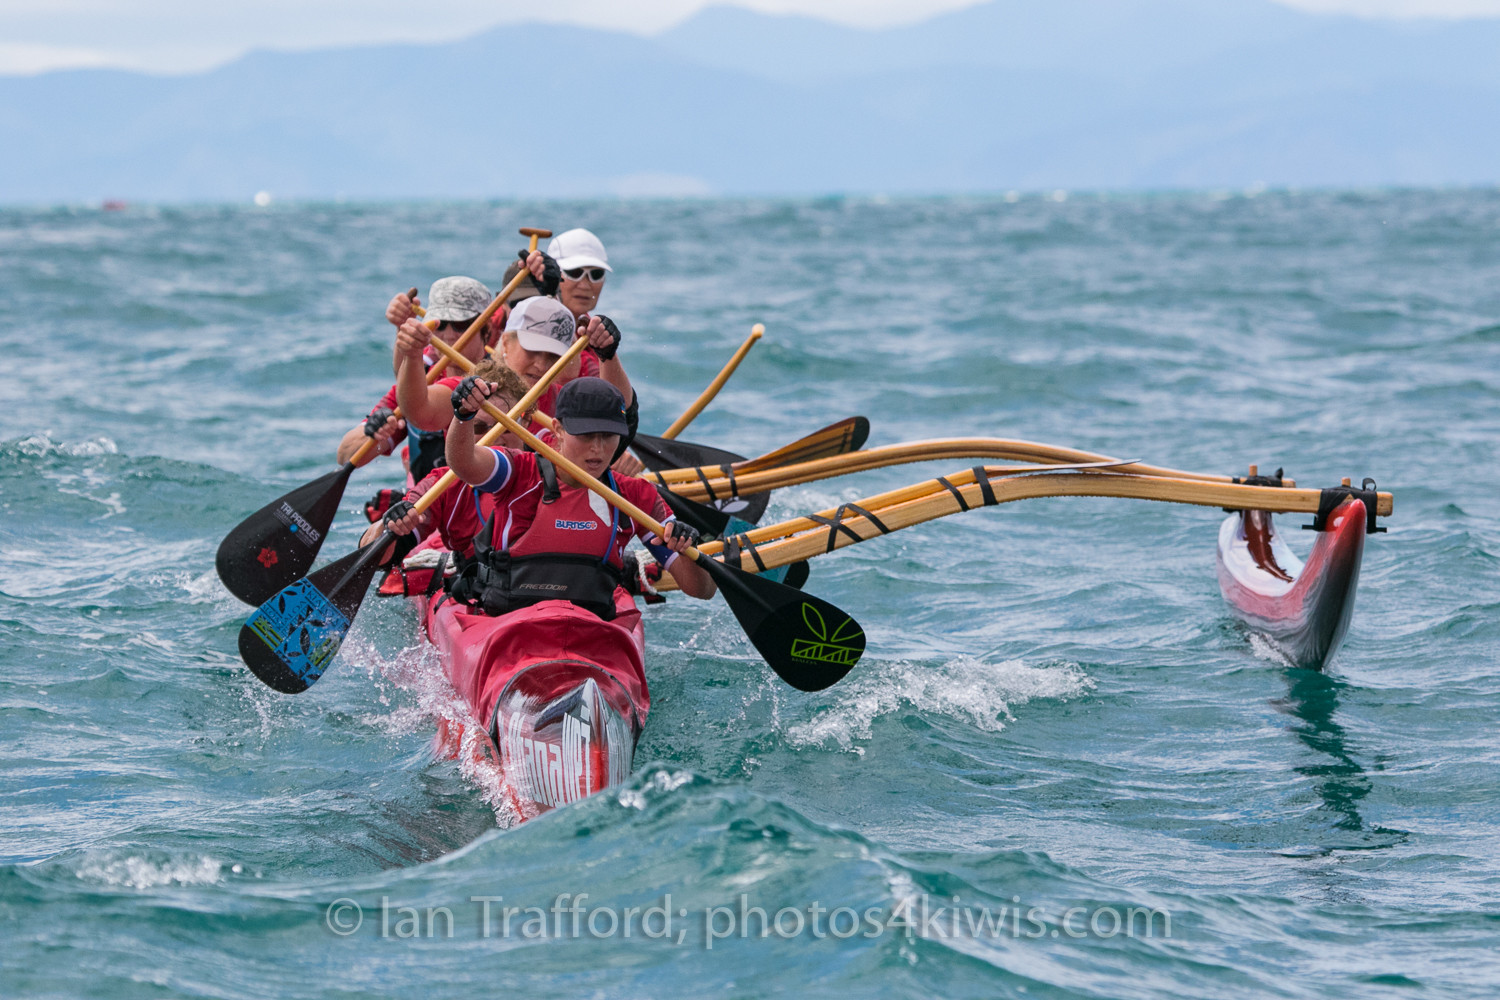 Waka Te Tasman Results and Photos online now